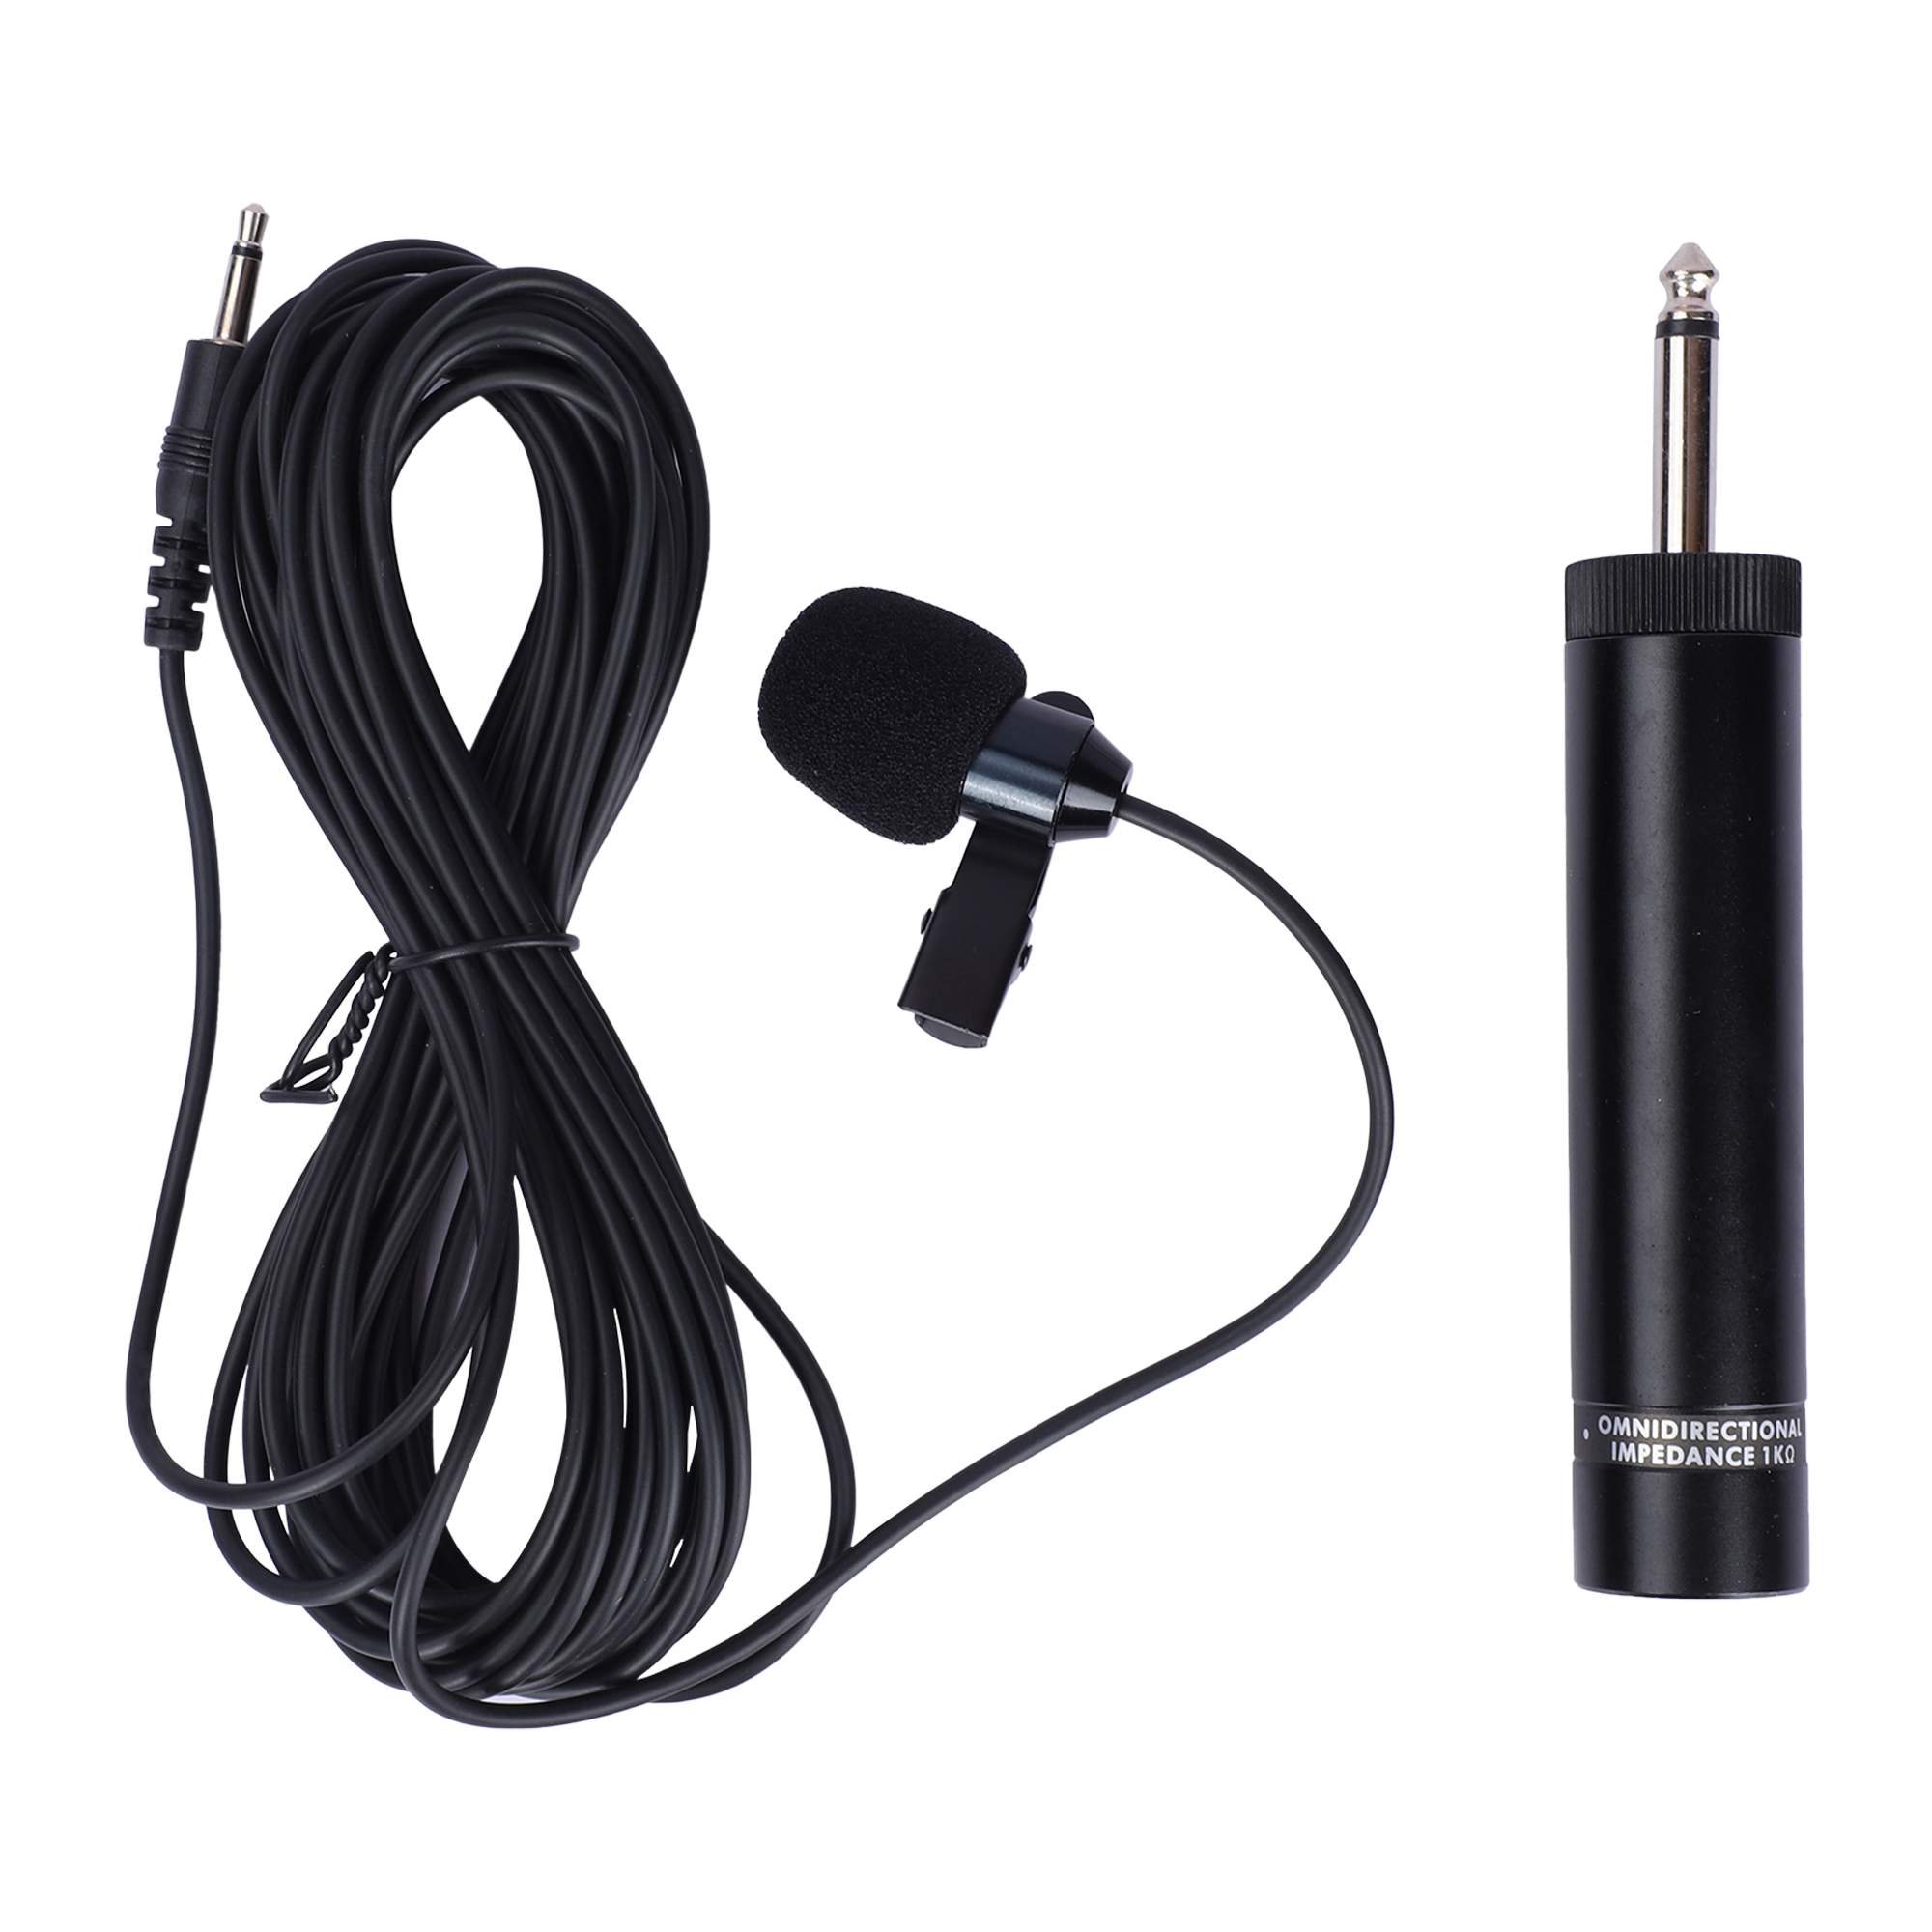 XLR10 Premium Lavalier Microphone